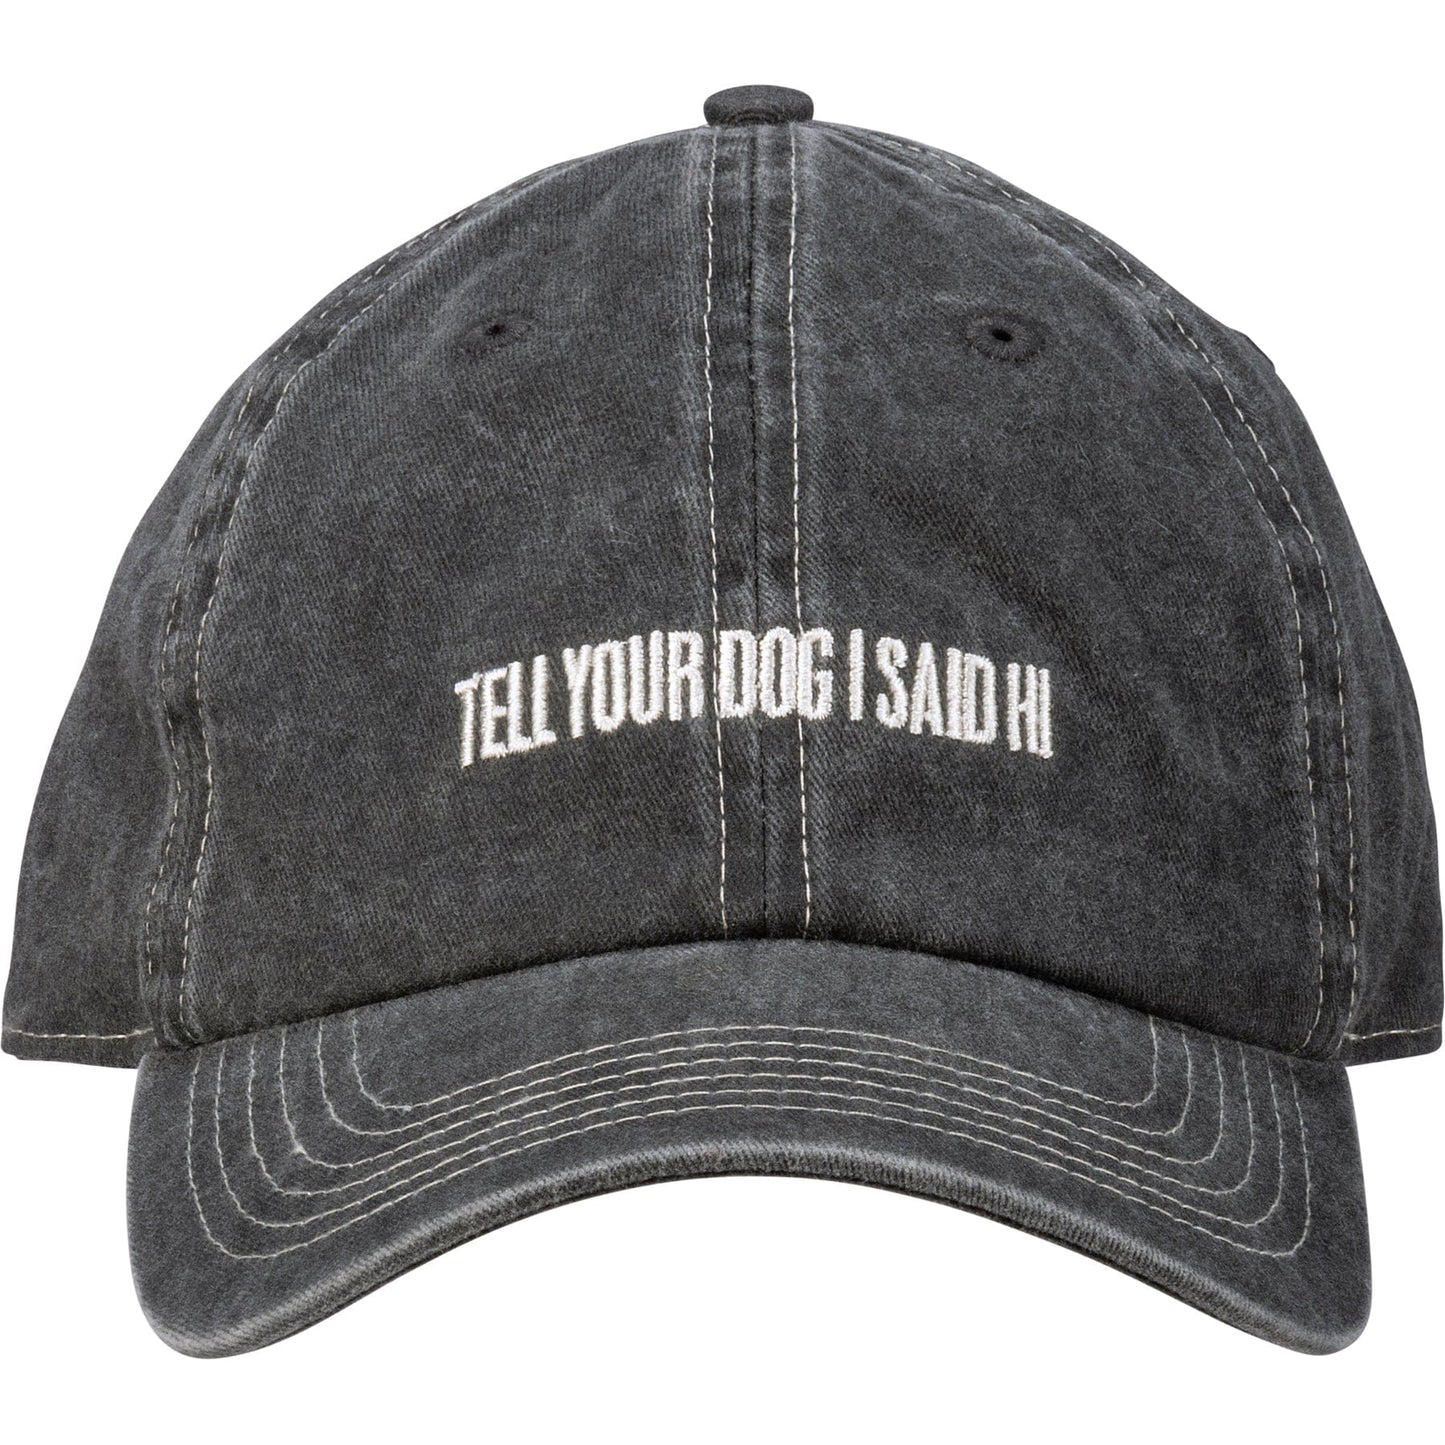 One Size Fits All Baseball Cap - Tell Your Dog I Said Hi PBK - 108661